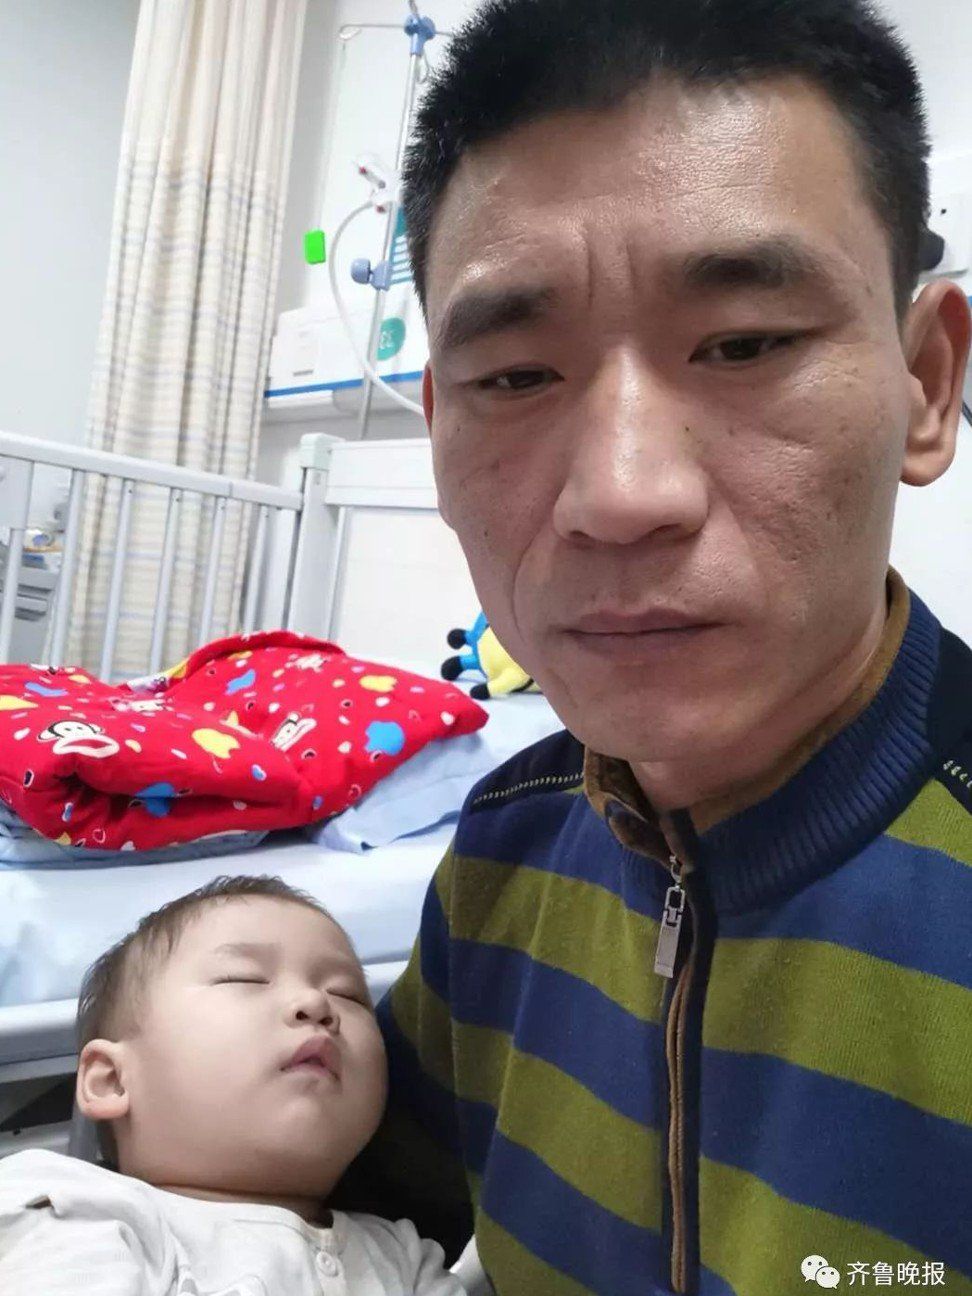 Tang Shaolong mengatakan menemukan dompet di luar rumah sakit membantu membalikkan nasib putranya.